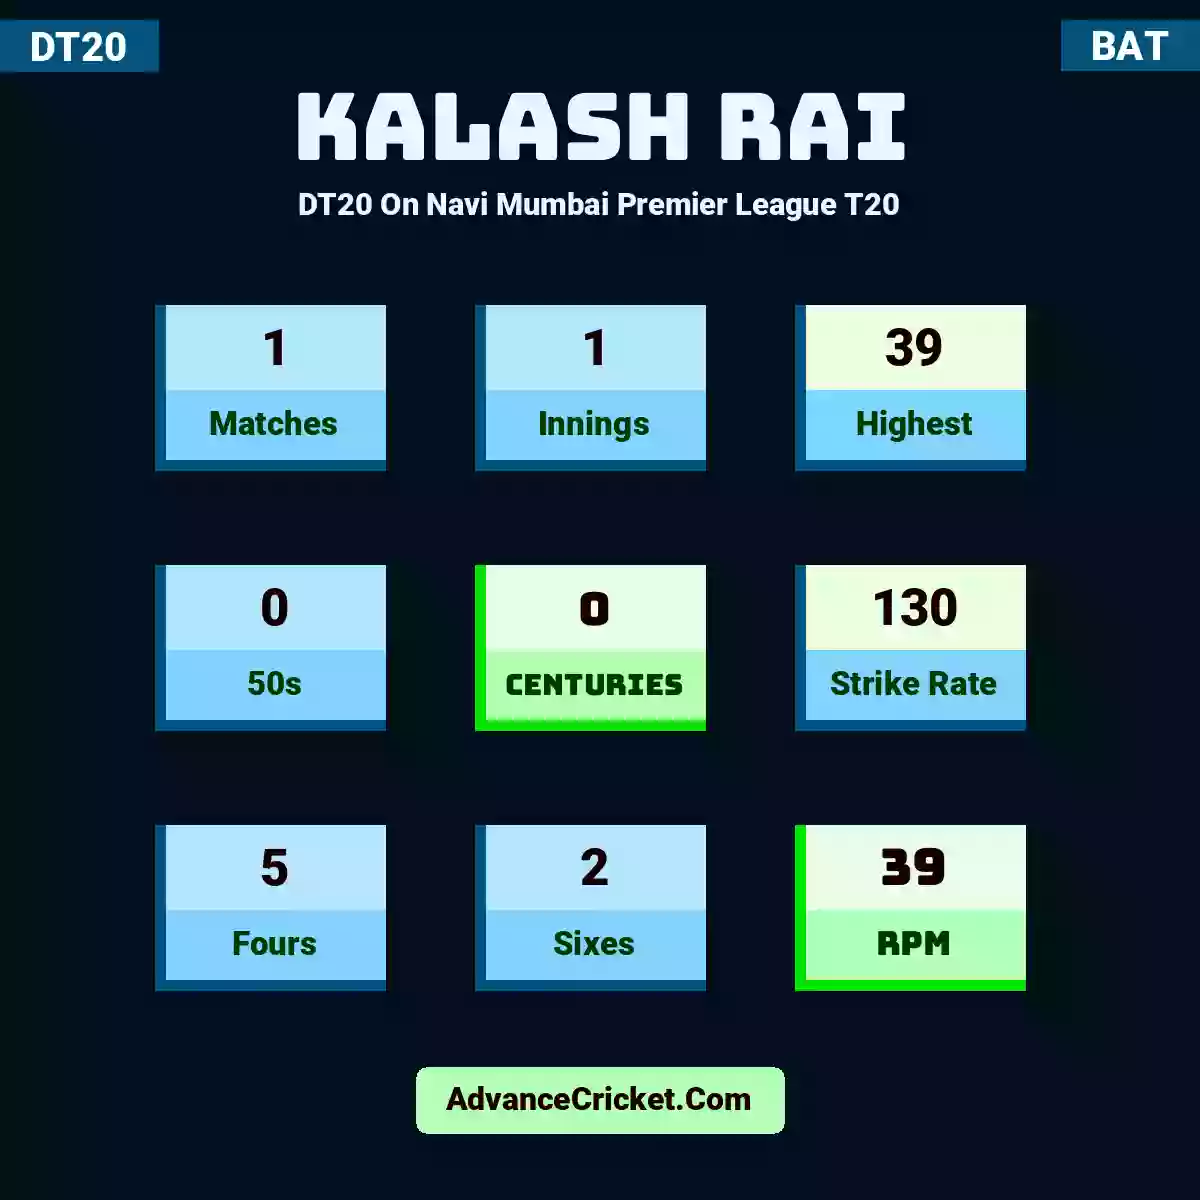 Kalash Rai DT20  On Navi Mumbai Premier League T20, Kalash Rai played 1 matches, scored 39 runs as highest, 0 half-centuries, and 0 centuries, with a strike rate of 130. K.Rai hit 5 fours and 2 sixes, with an RPM of 39.